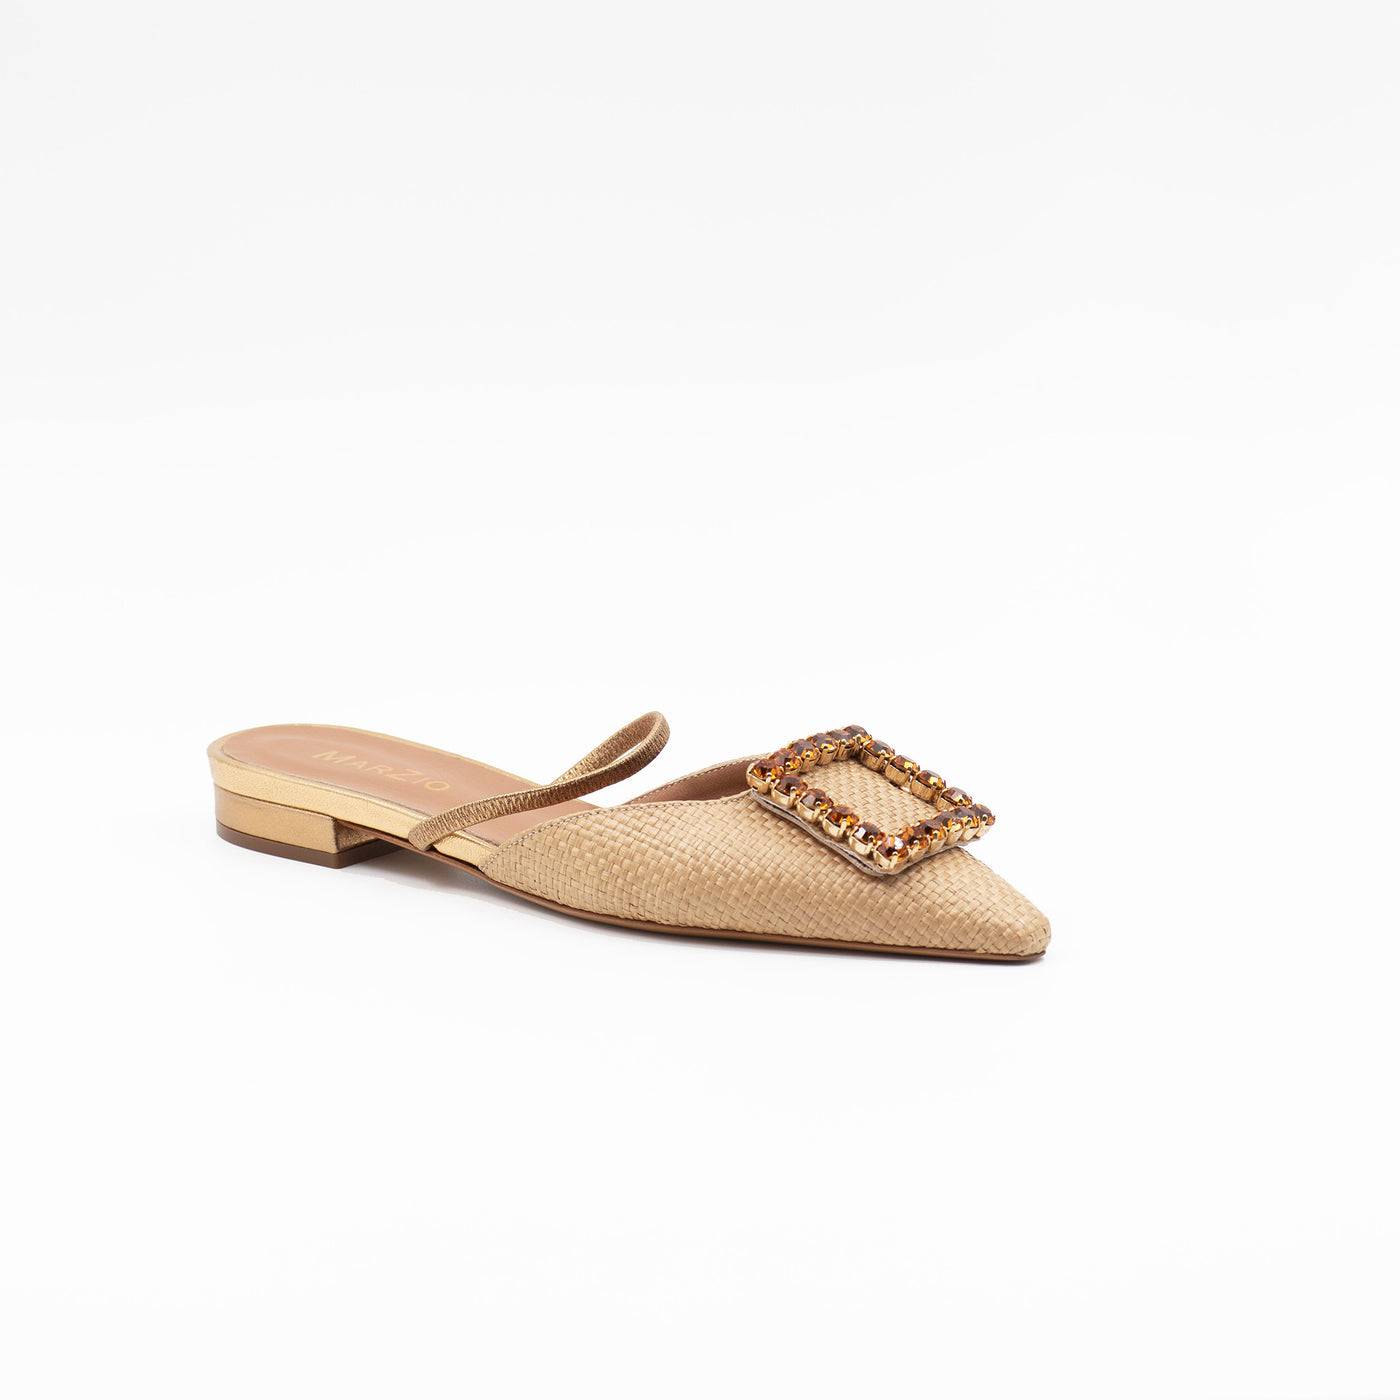 Point toe raffia sandal with embellishment